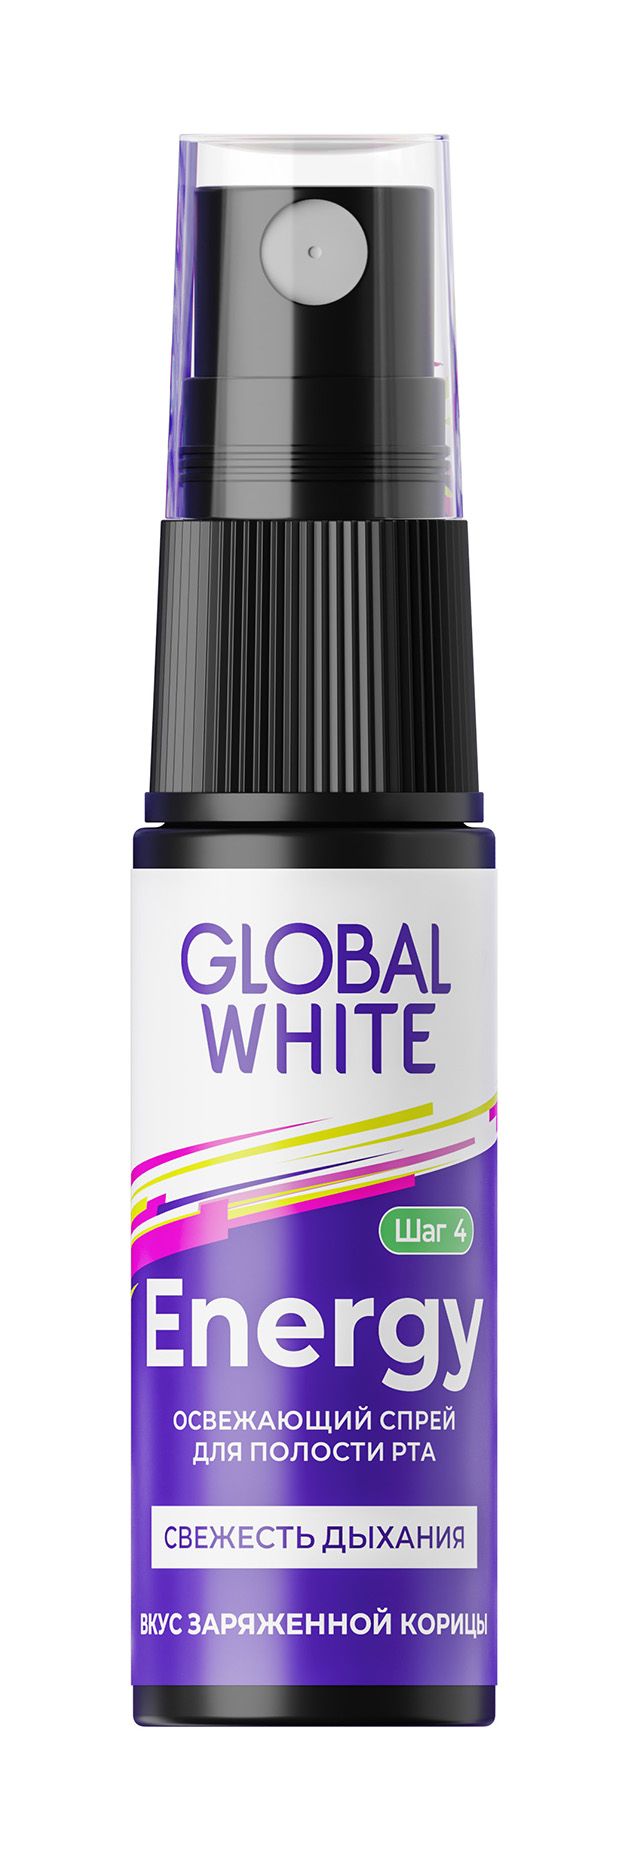 фото упаковки Global White спрей для полости рта освежающий